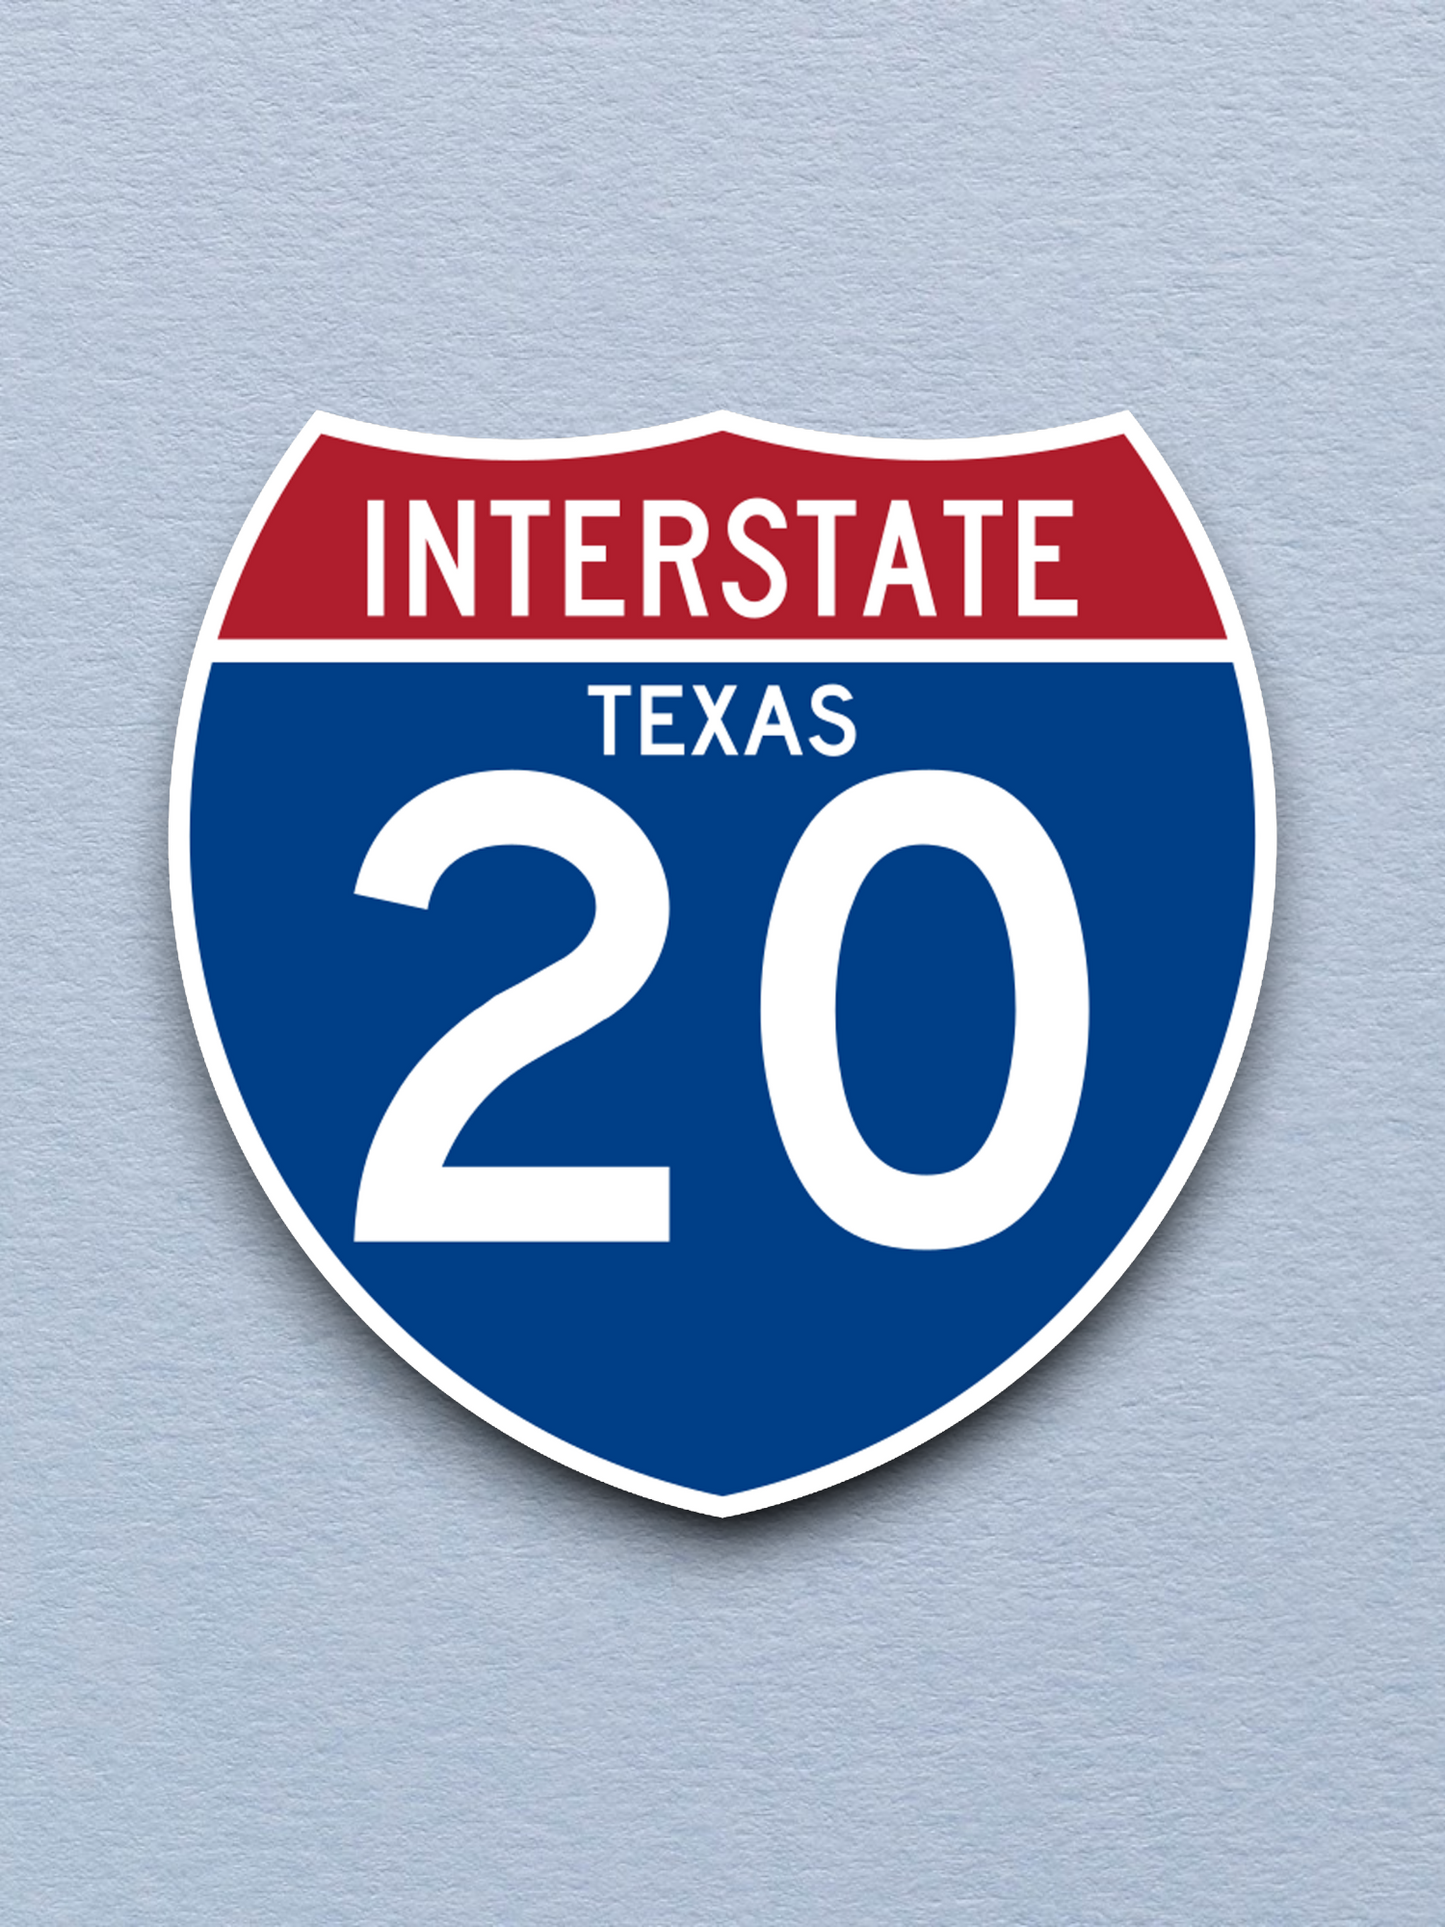 Interstate I-20 Texas - Road Sign Sticker